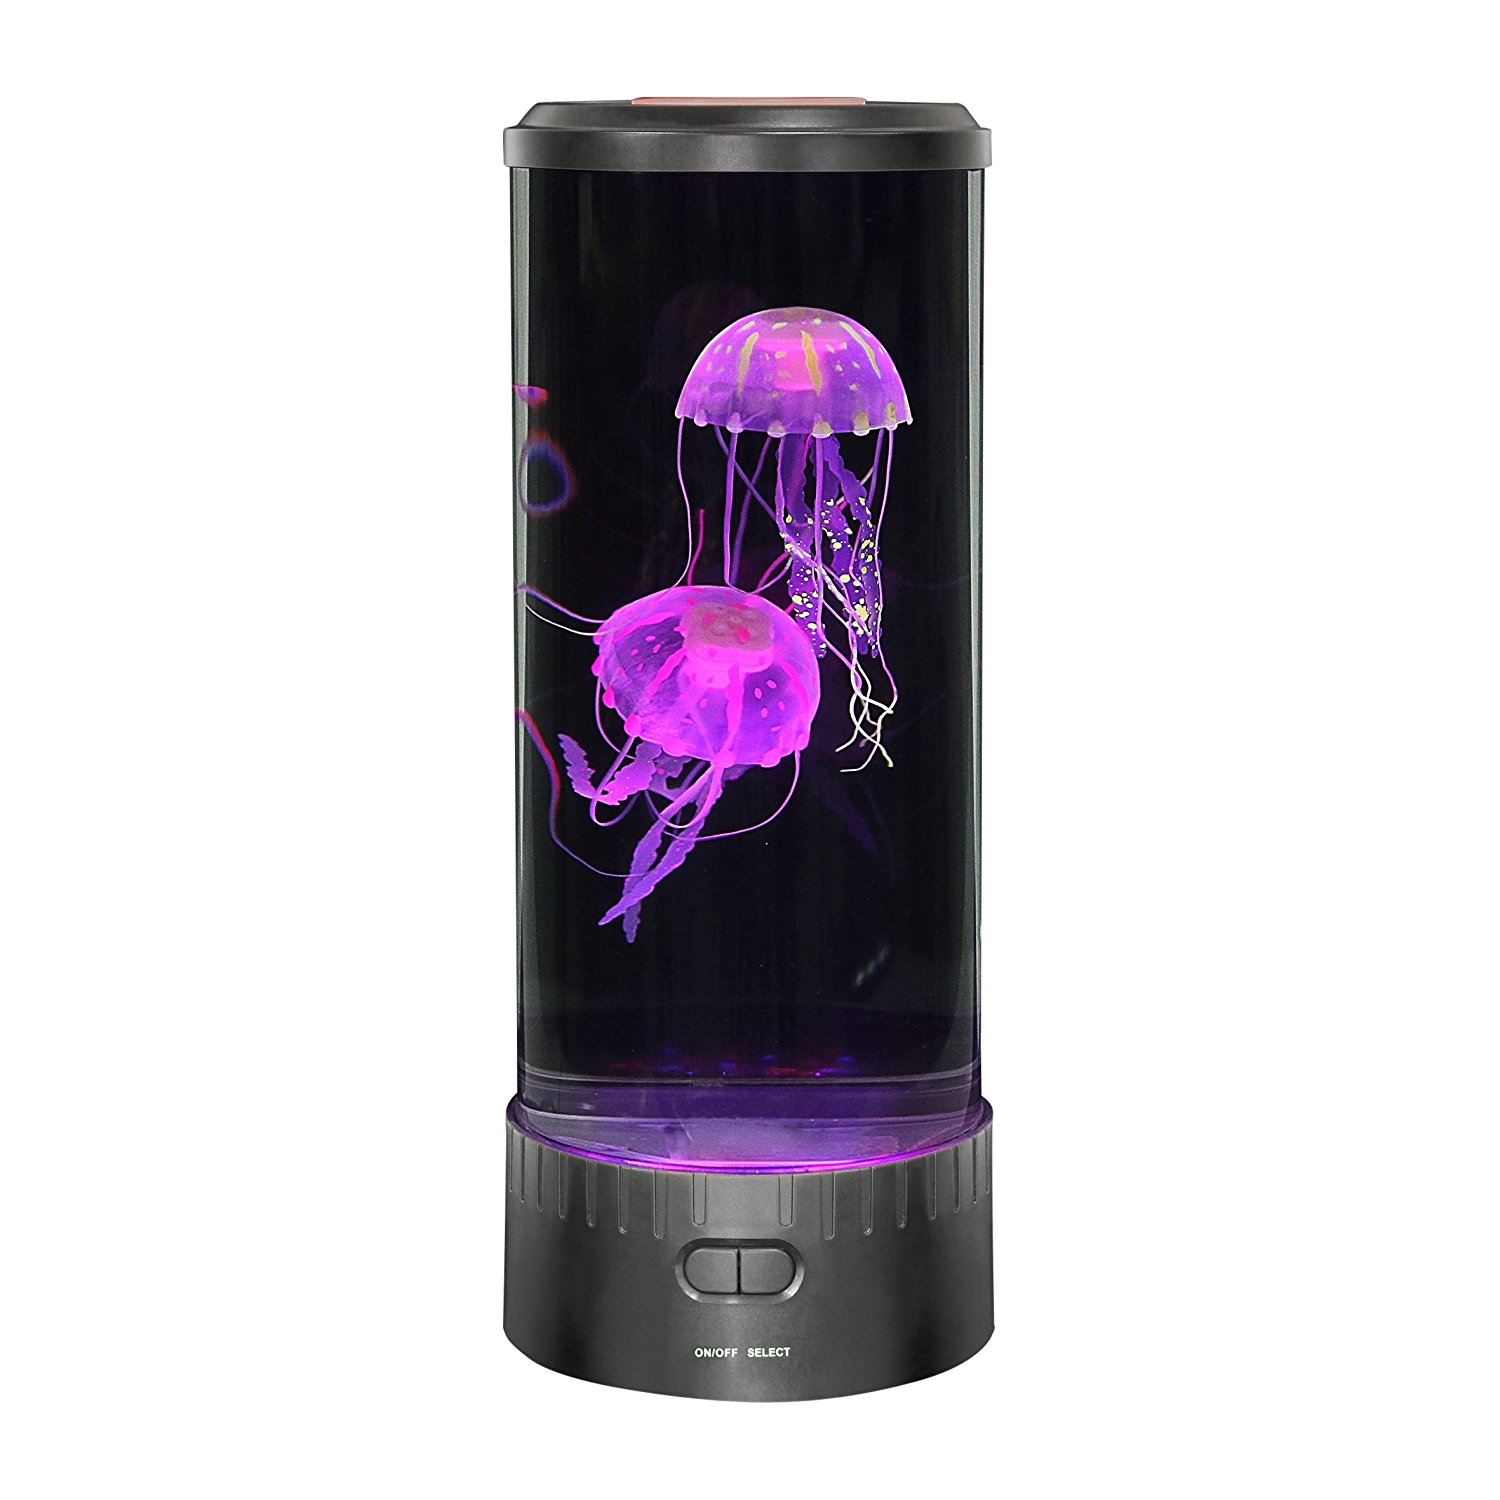 Jellyfish mood light